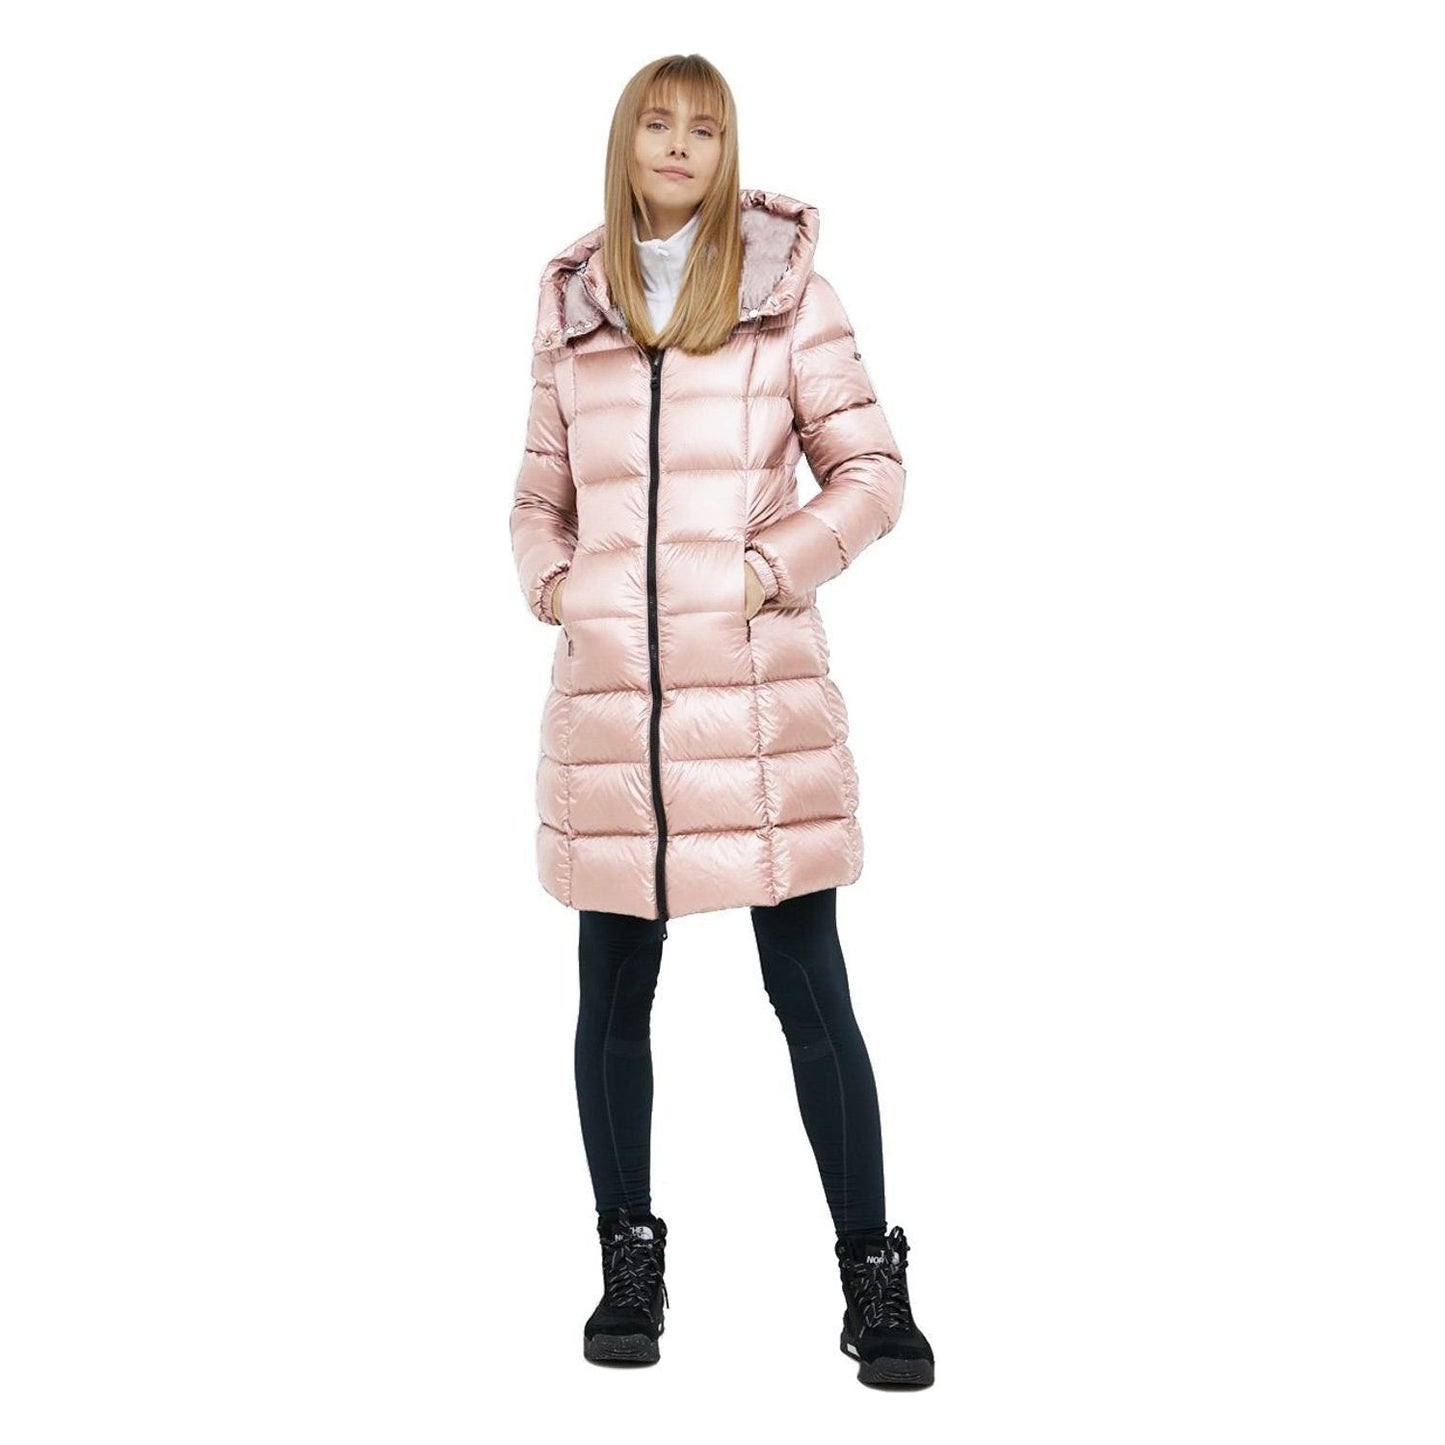 Refrigiwear Elegant Long Down Jacket with Removable Hood WOMAN COATS & JACKETS pink-nylon-jackets-coat product-7909-1139266708-3-aae7a775-063.jpg